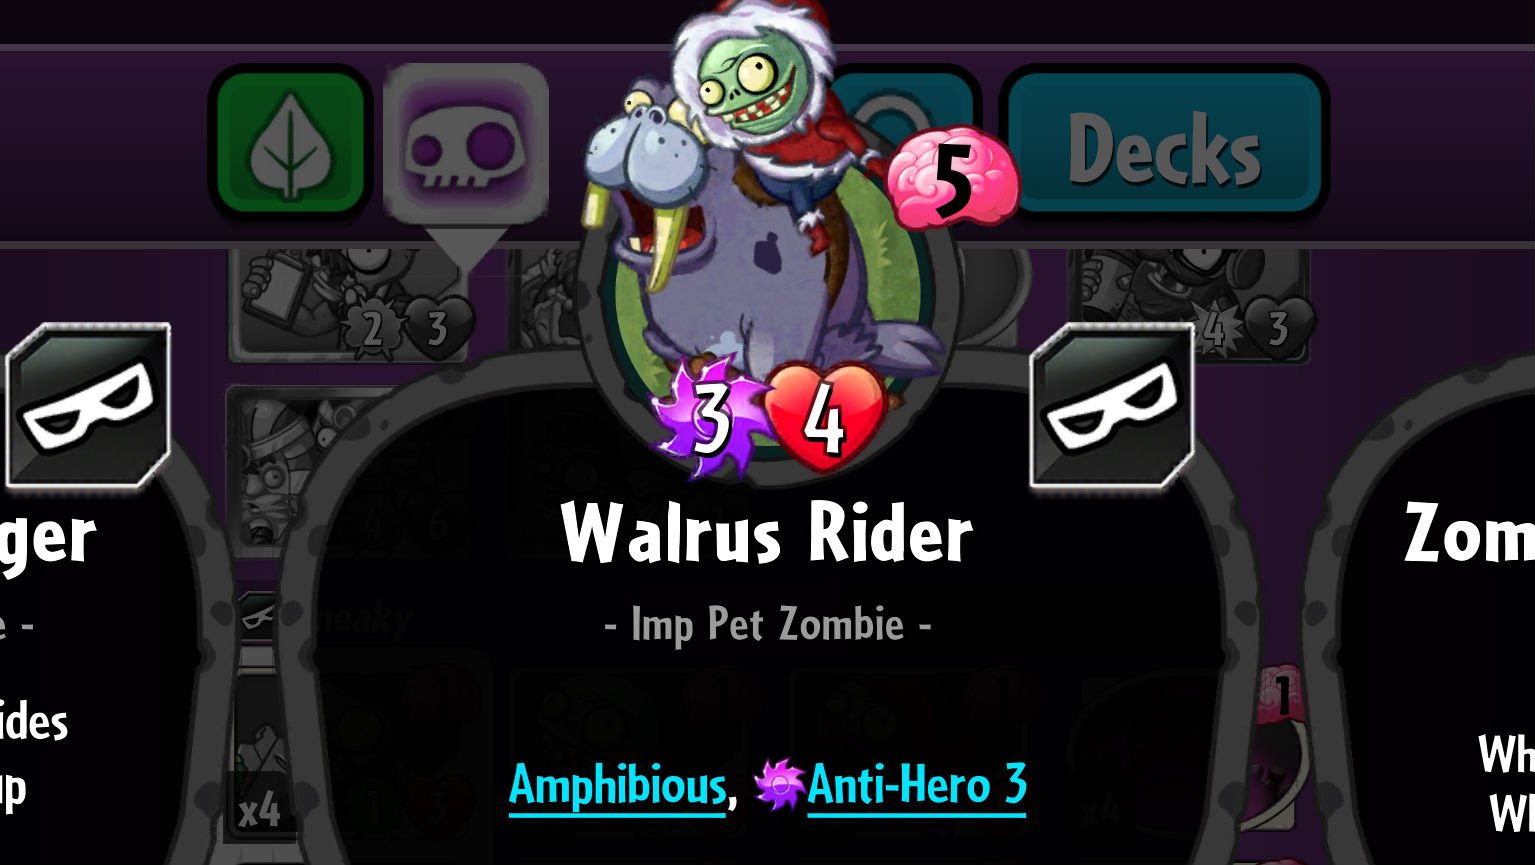 Plants vs. Zombies Walrus Rider